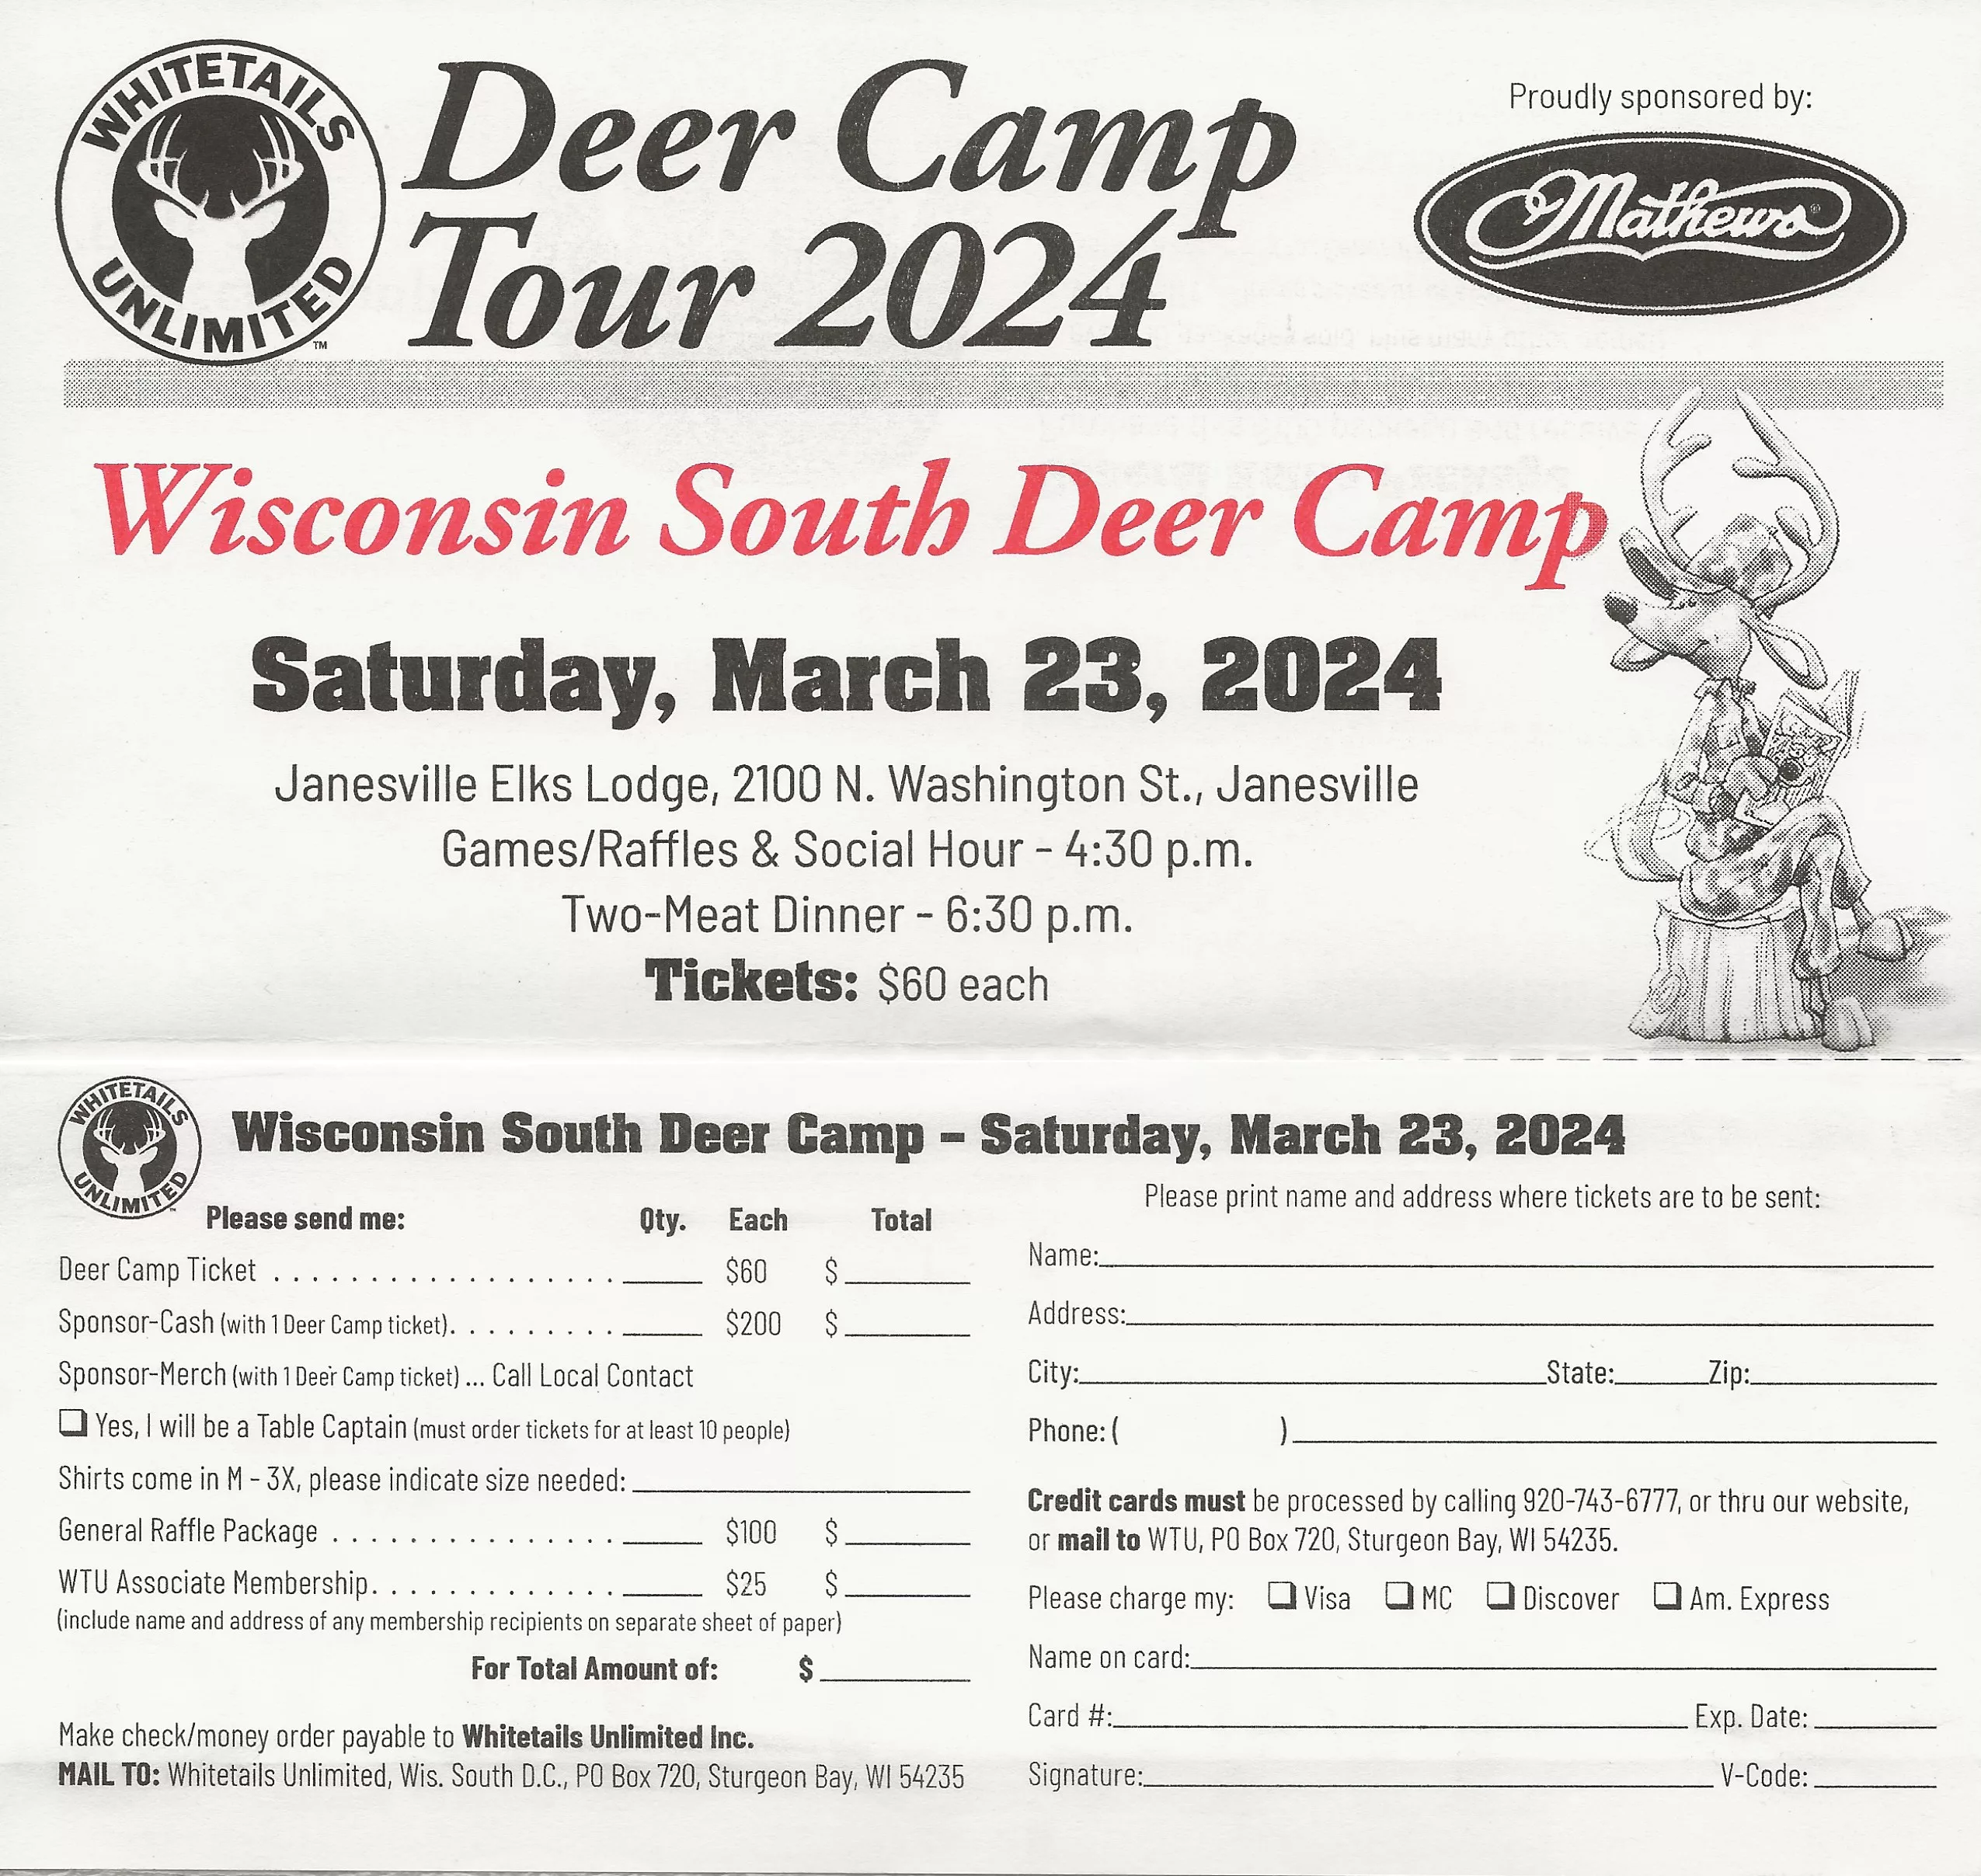 Wisconsin South Deer Camp Tour 2024 WWHG 105.9 The HOG